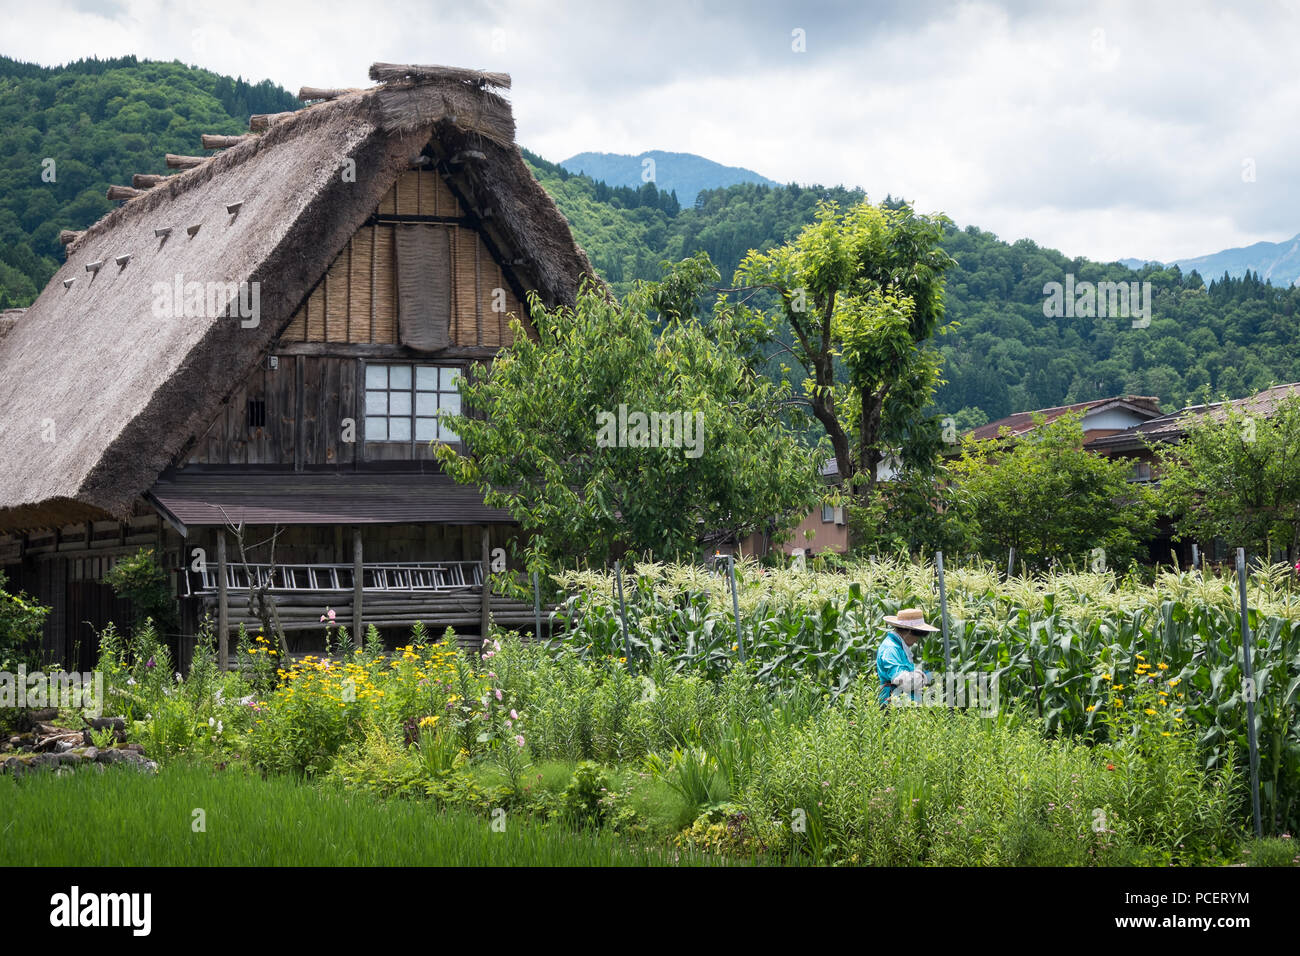 The historic village of Shirakawa-go, a UNESCO world heritage site, in Central Japan Stock Photo